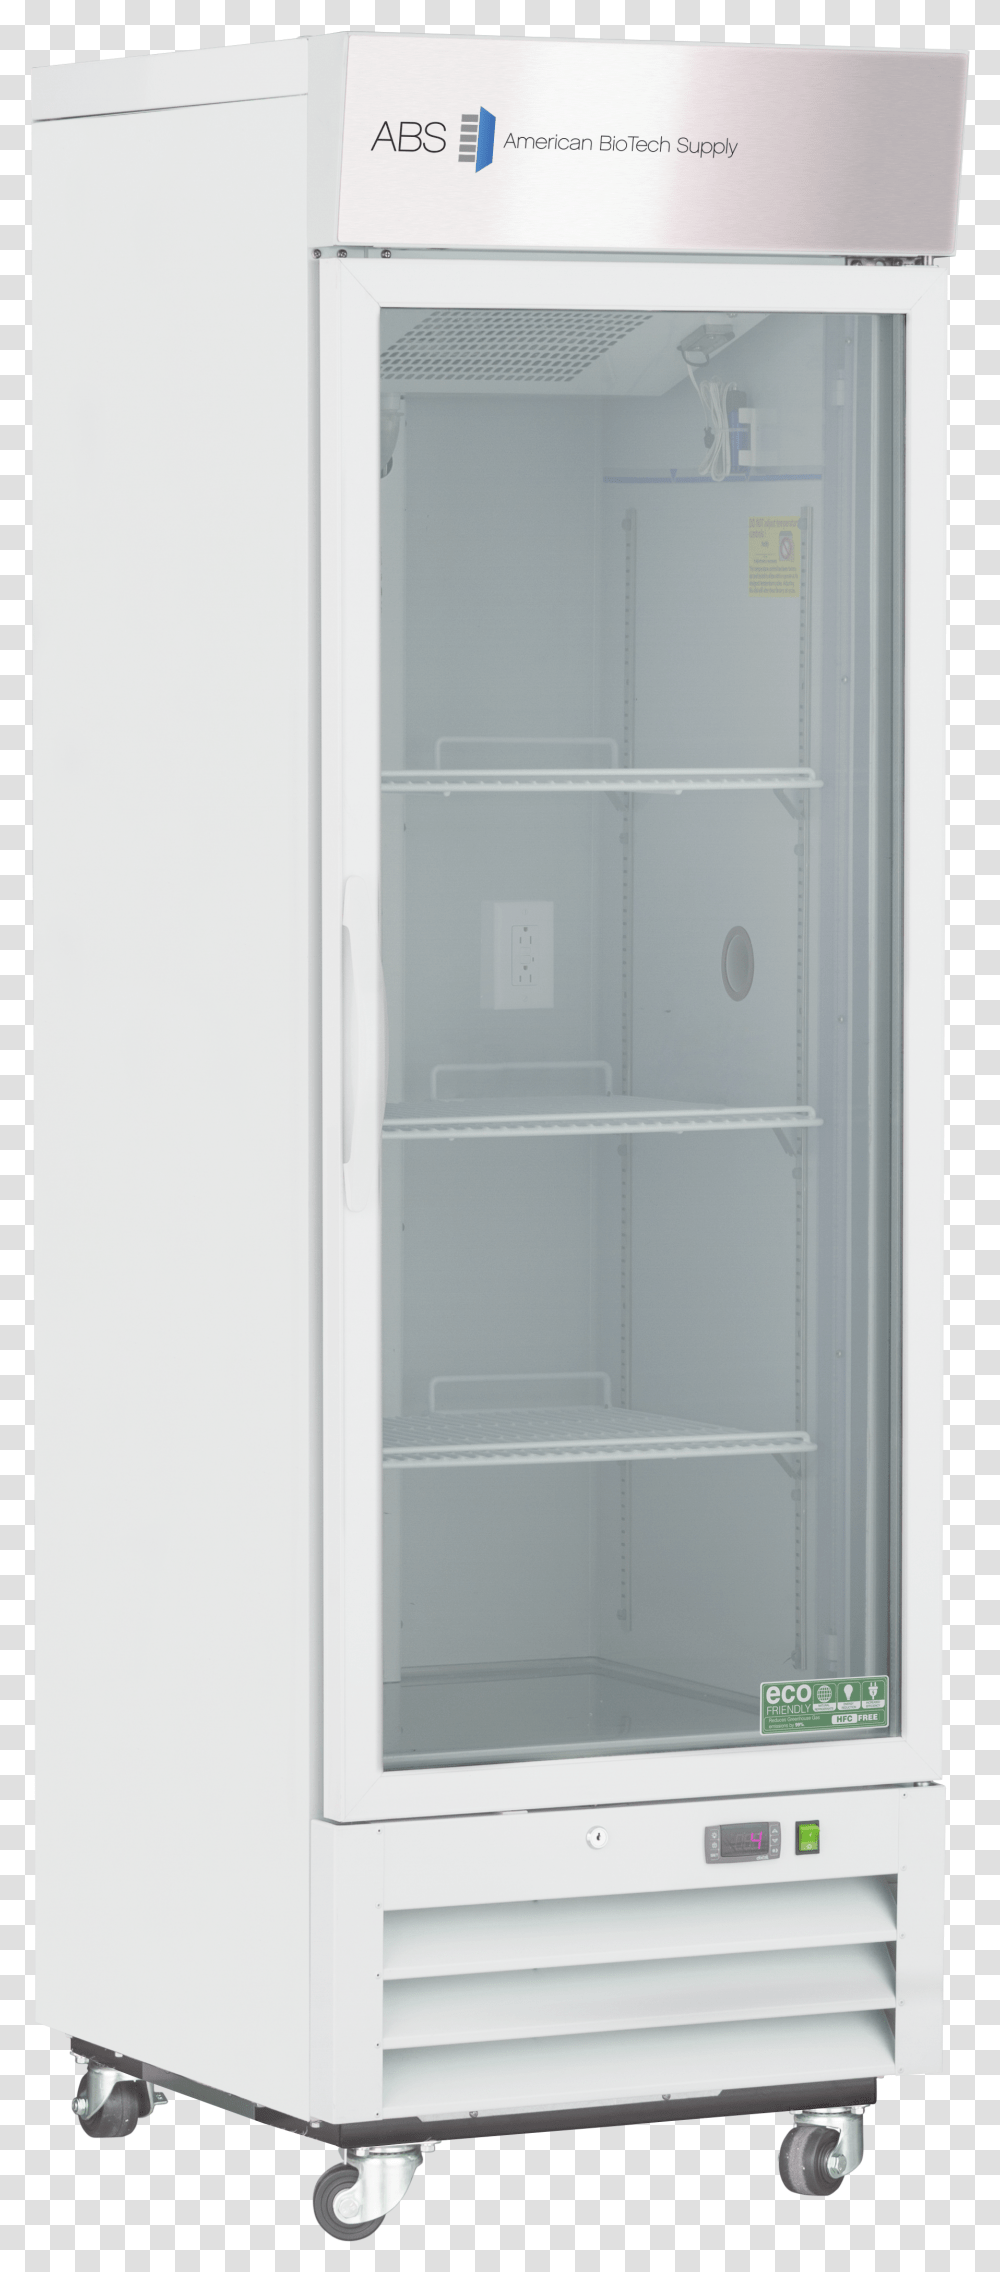 Abt Cs 16 Ext Image 16 Cu Ft Capacity Standard Glass Door Laboratory Refrigerator Transparent Png